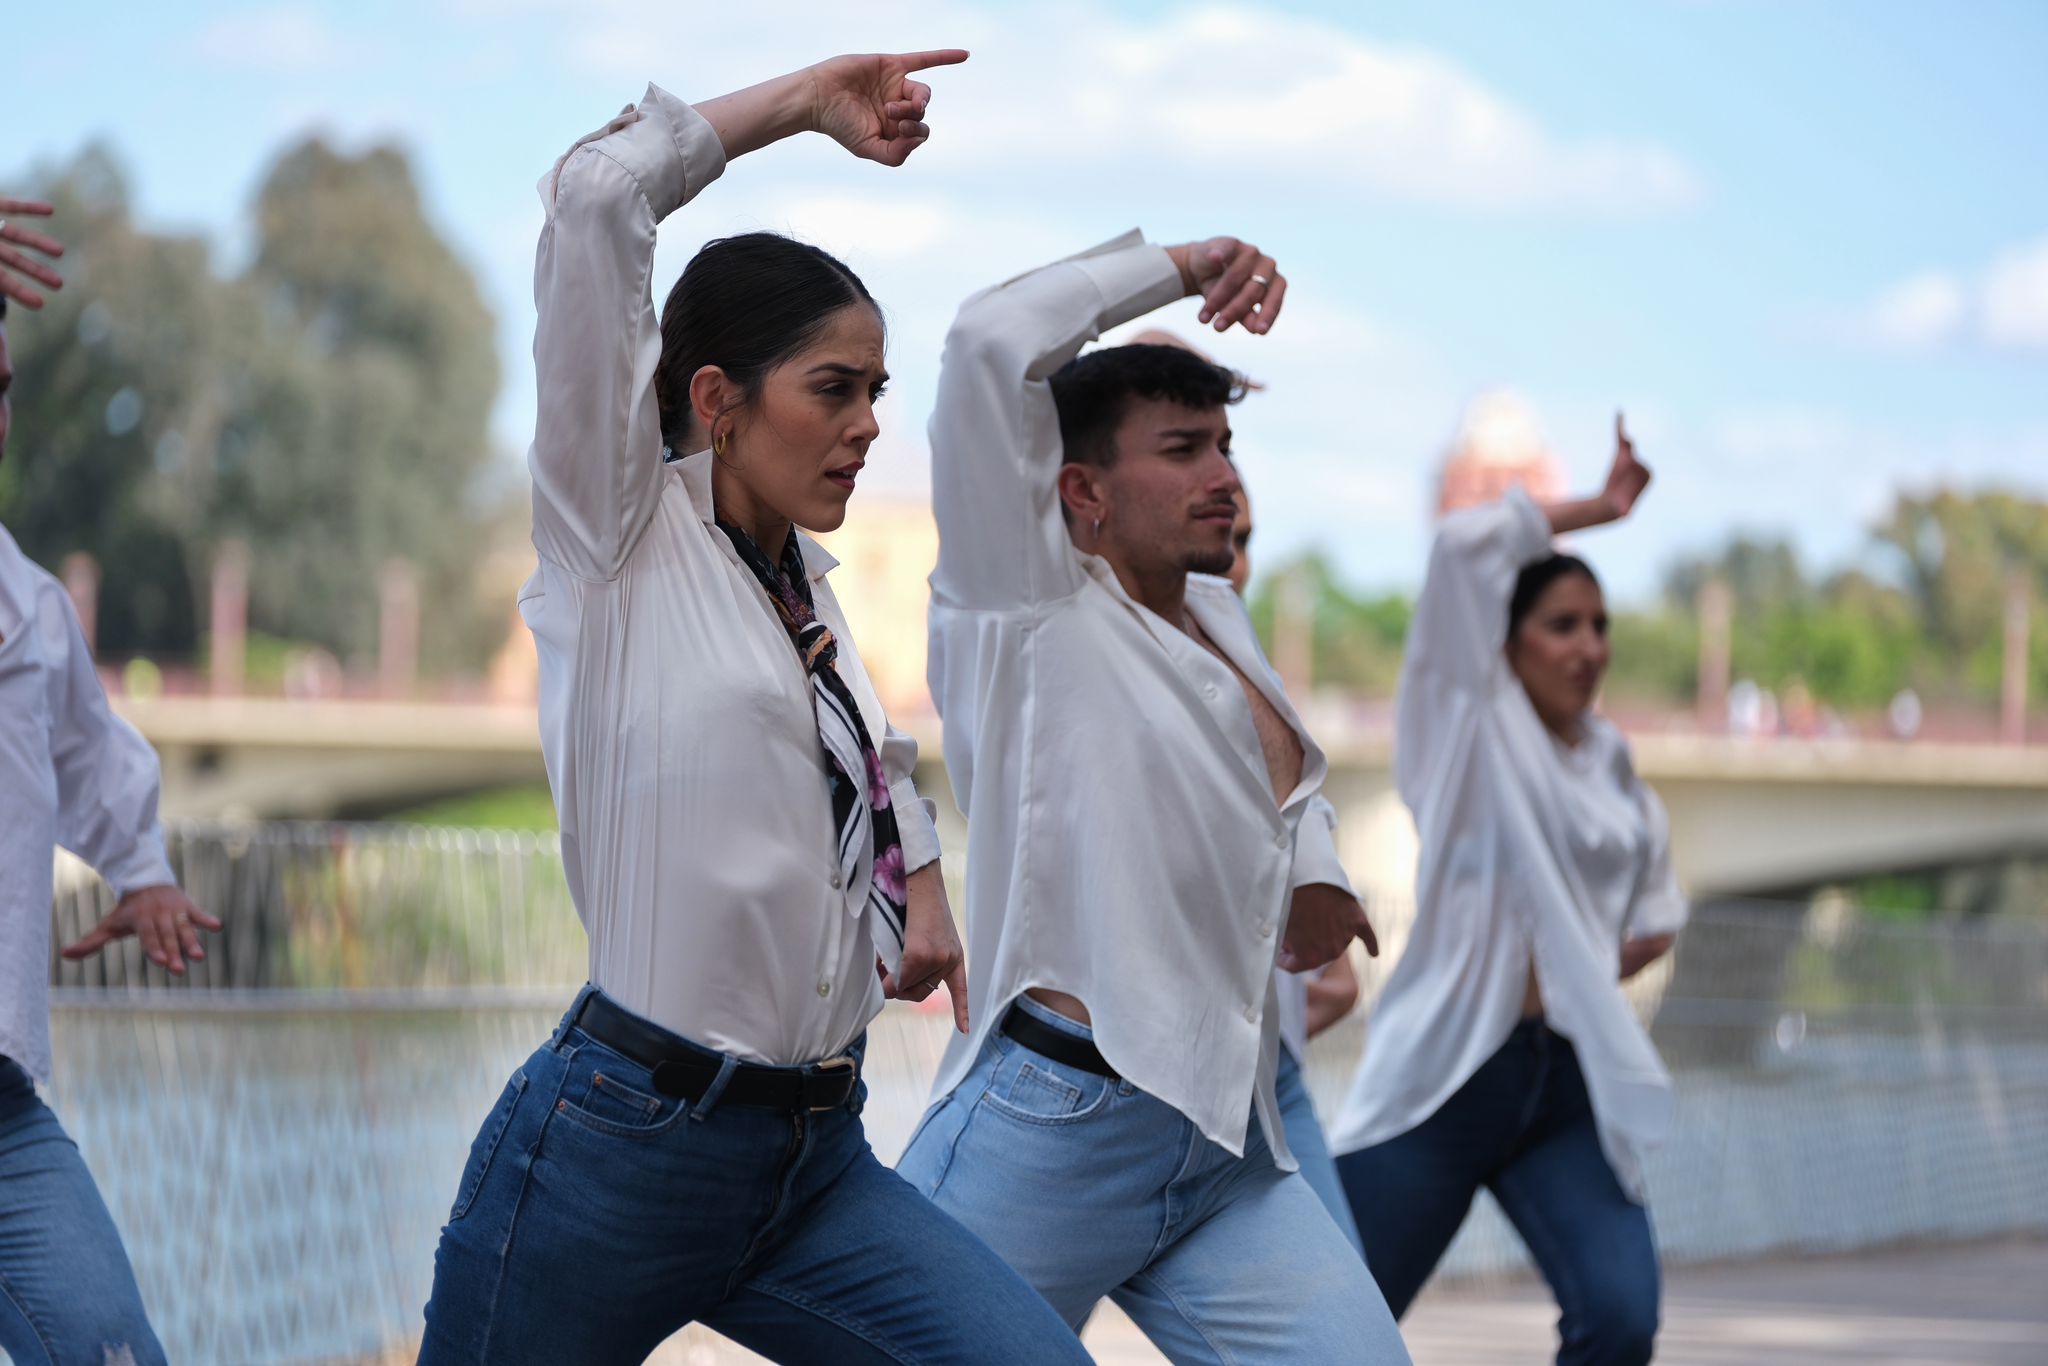 El Ballet Flamenco de Andalucía protagoniza esta el flash mob de la 23 Bienal de Flamenco de Sevilla.